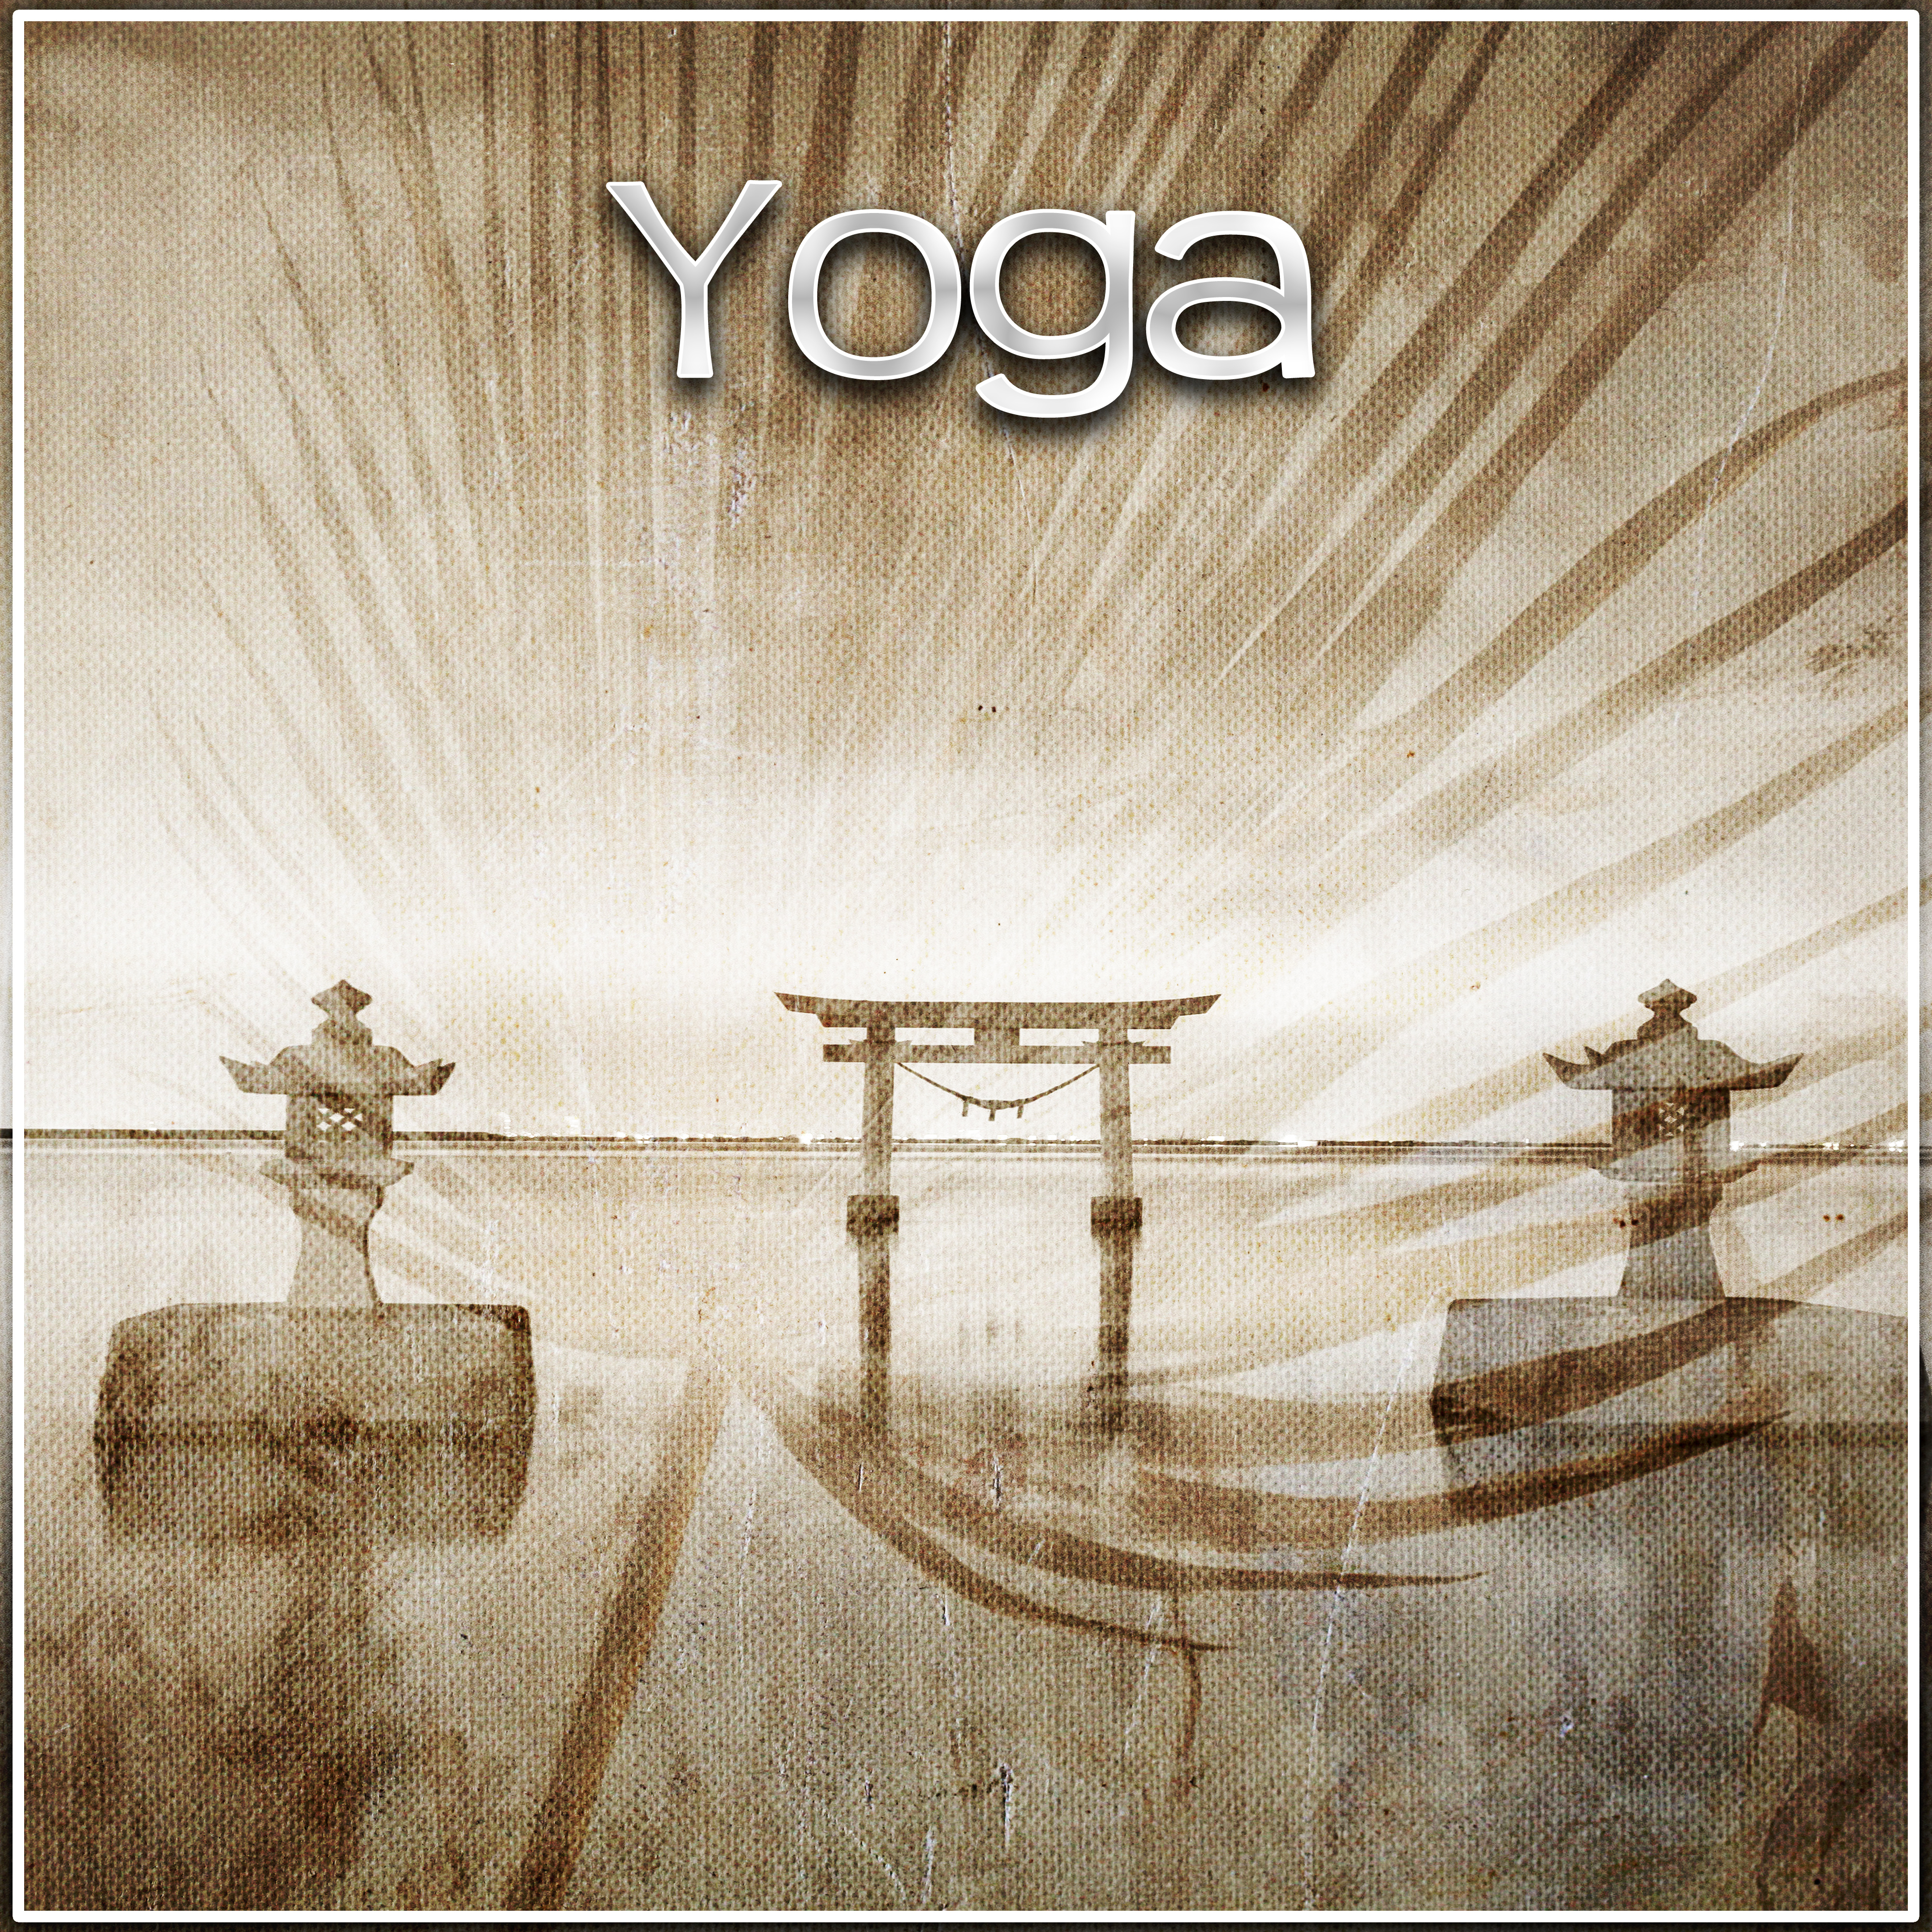 Yoga – Reiki, Healing Music, Peaceful Music, Inner Silence, Mindfulness, Balancing Therapy, Deep Meditation